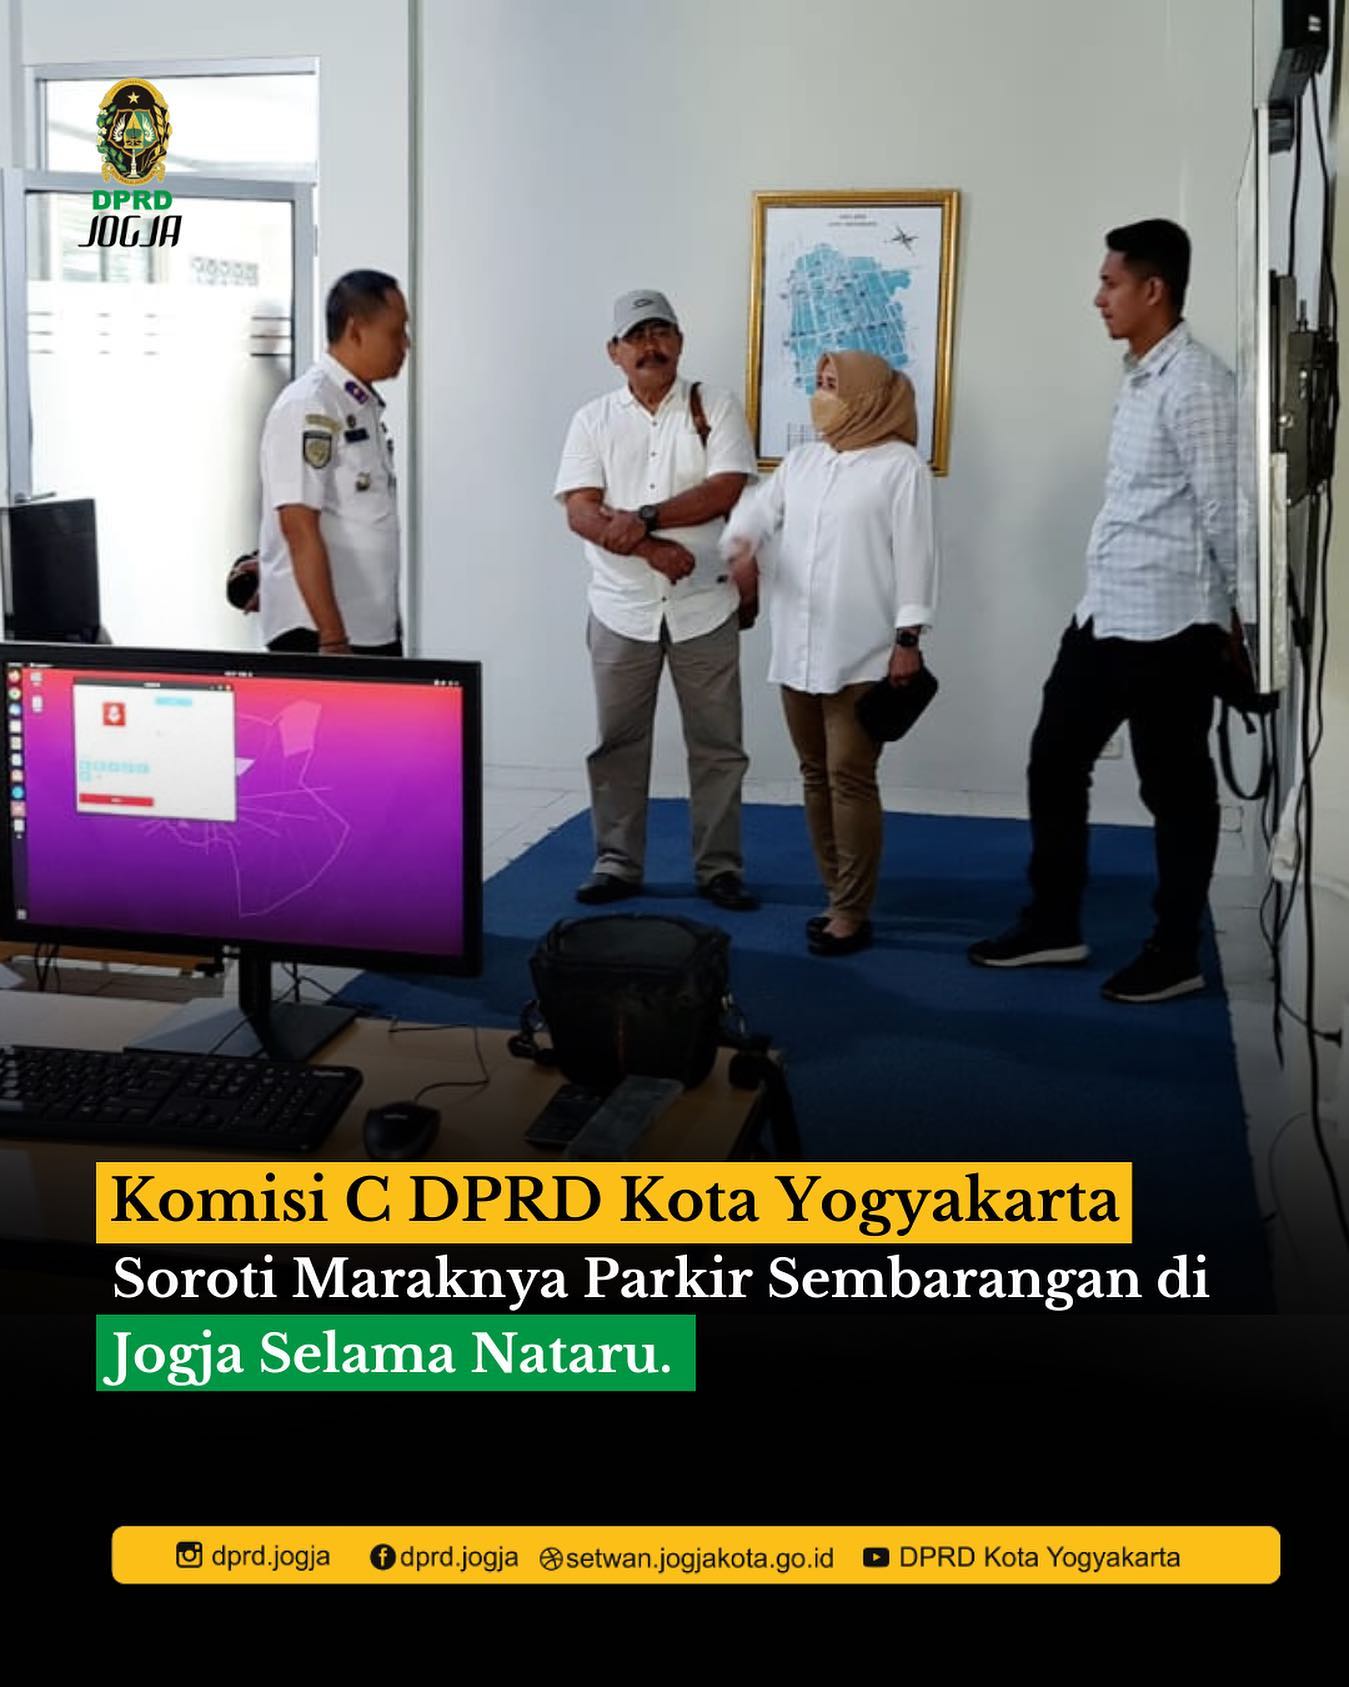 Komisi C DPRD Kota Yogyakarta Soroti Maraknya Parkir Sembarangan di Jogja Sleman Nataru